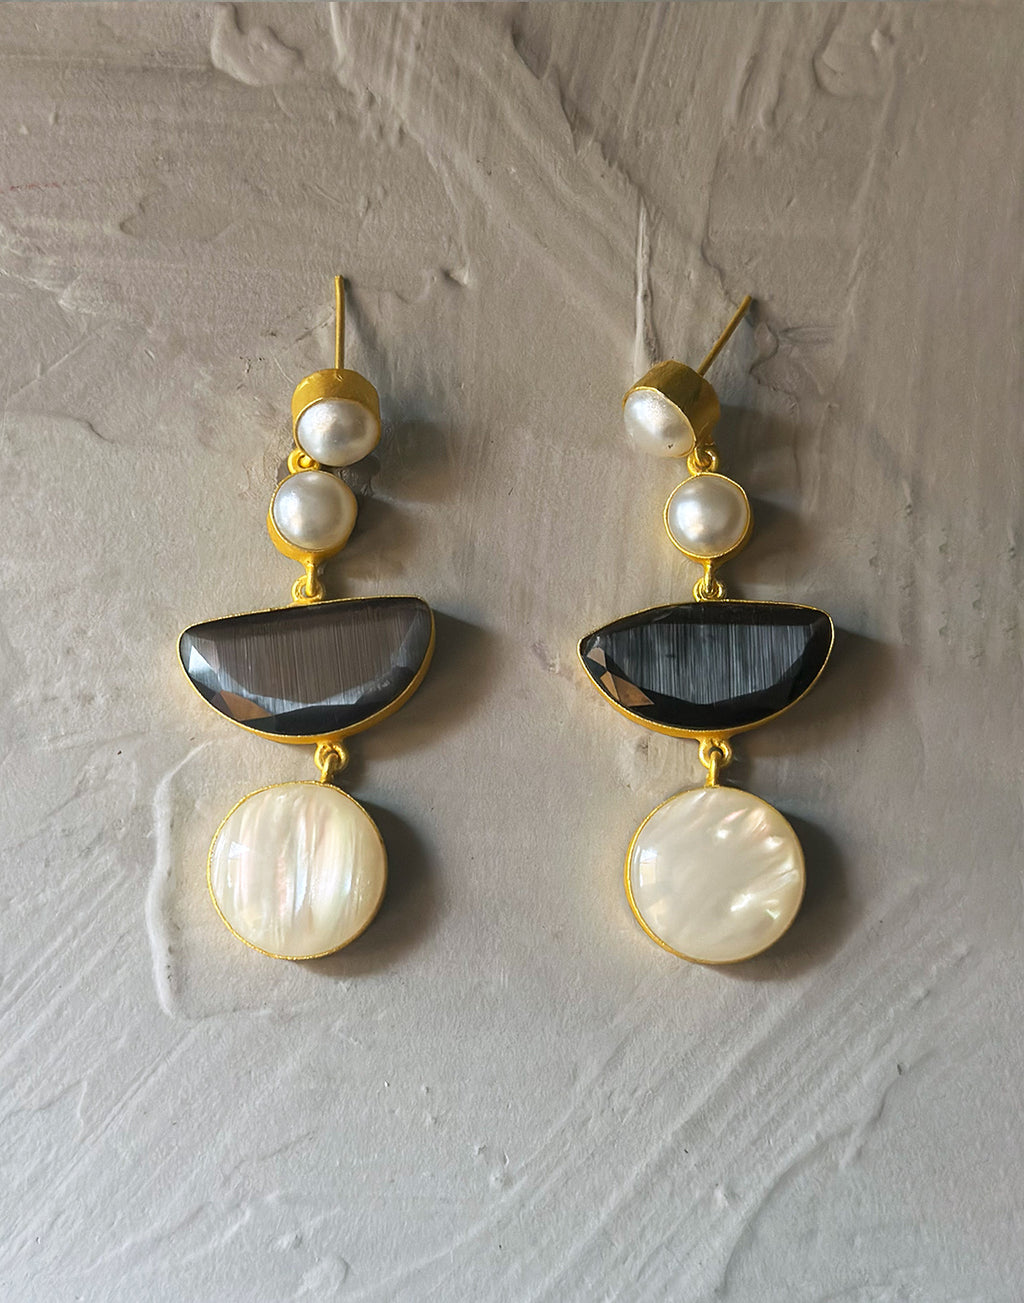 Indigo Monalisa & Pearl Danglers - Statement Earrings - Gold-Plated & Hypoallergenic Jewellery - Made in India - Dubai Jewellery - Dori